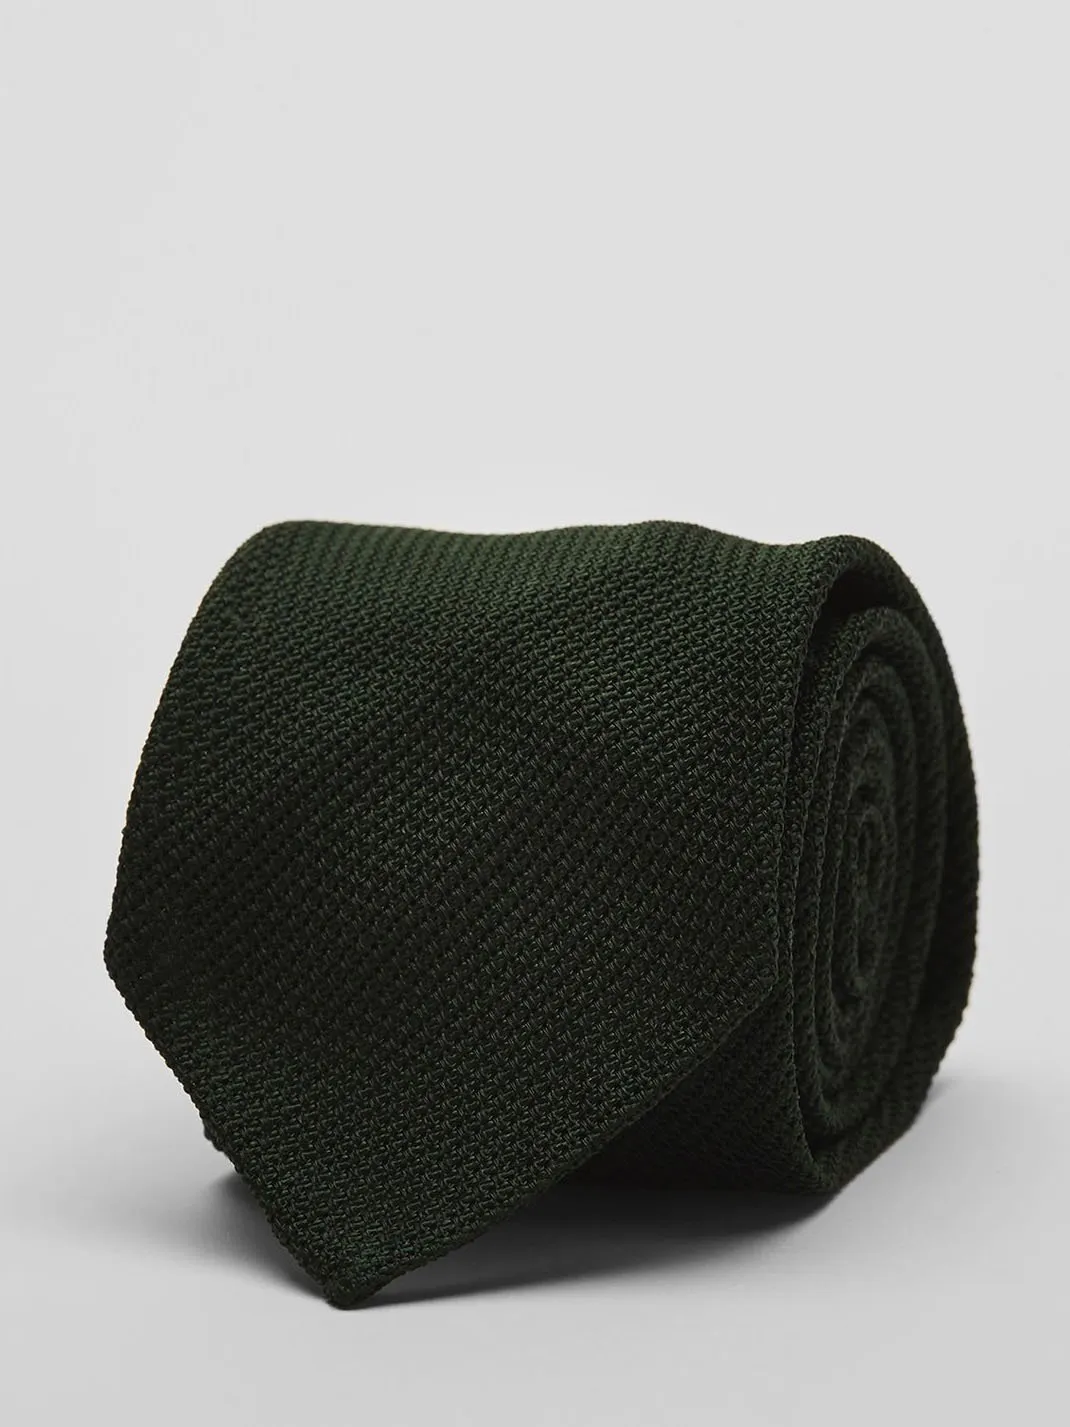 Green Grenadine Tie